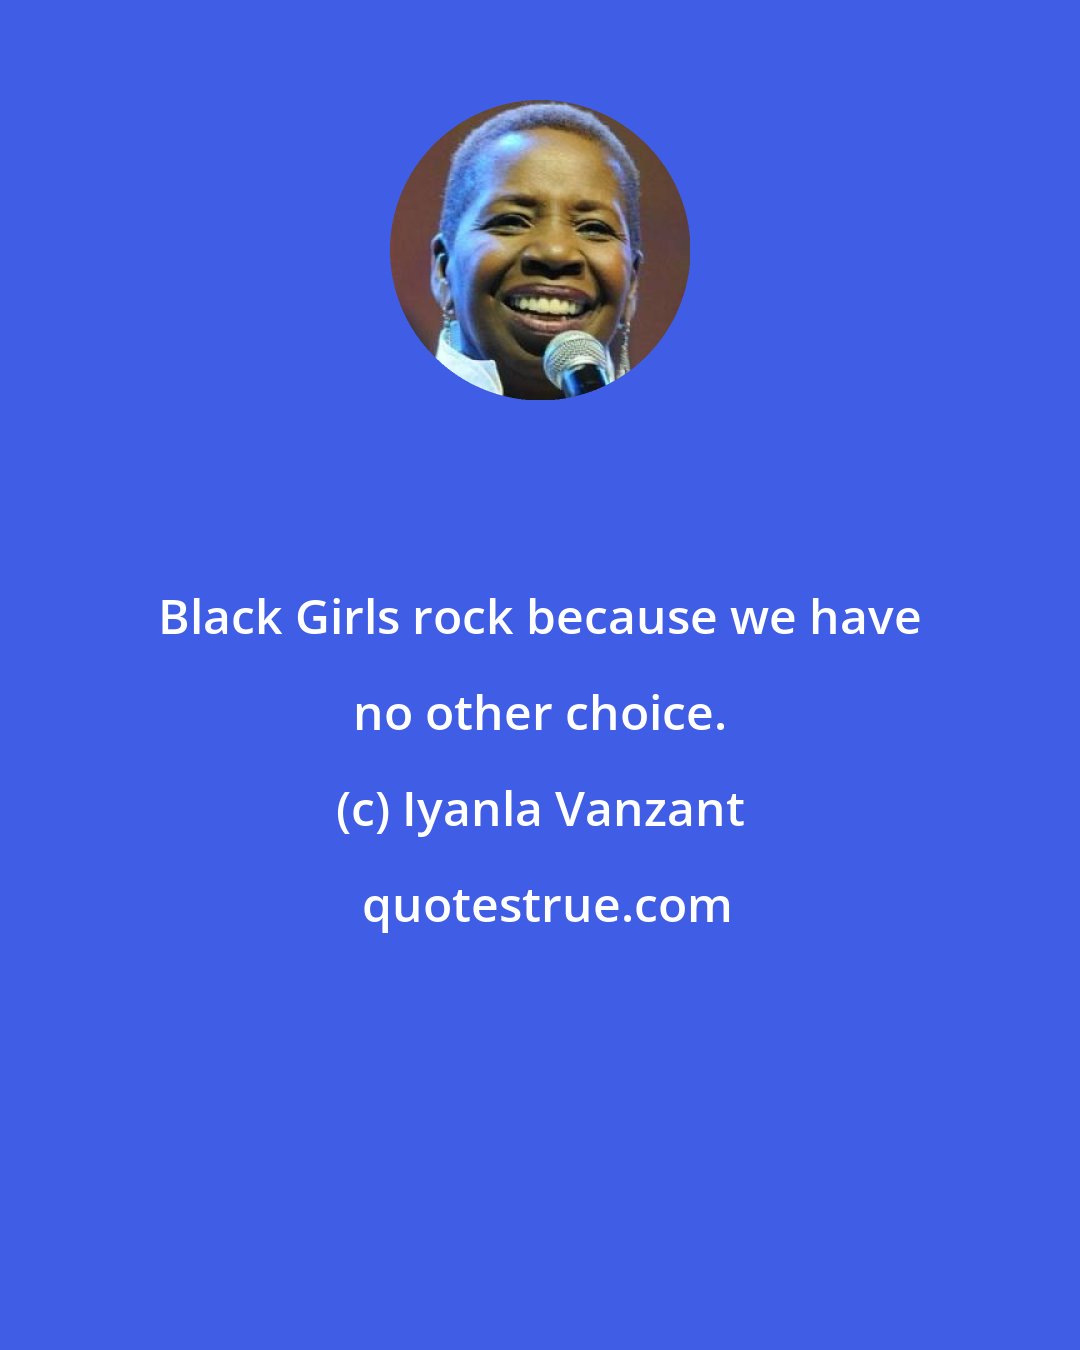 Iyanla Vanzant: Black Girls rock because we have no other choice.